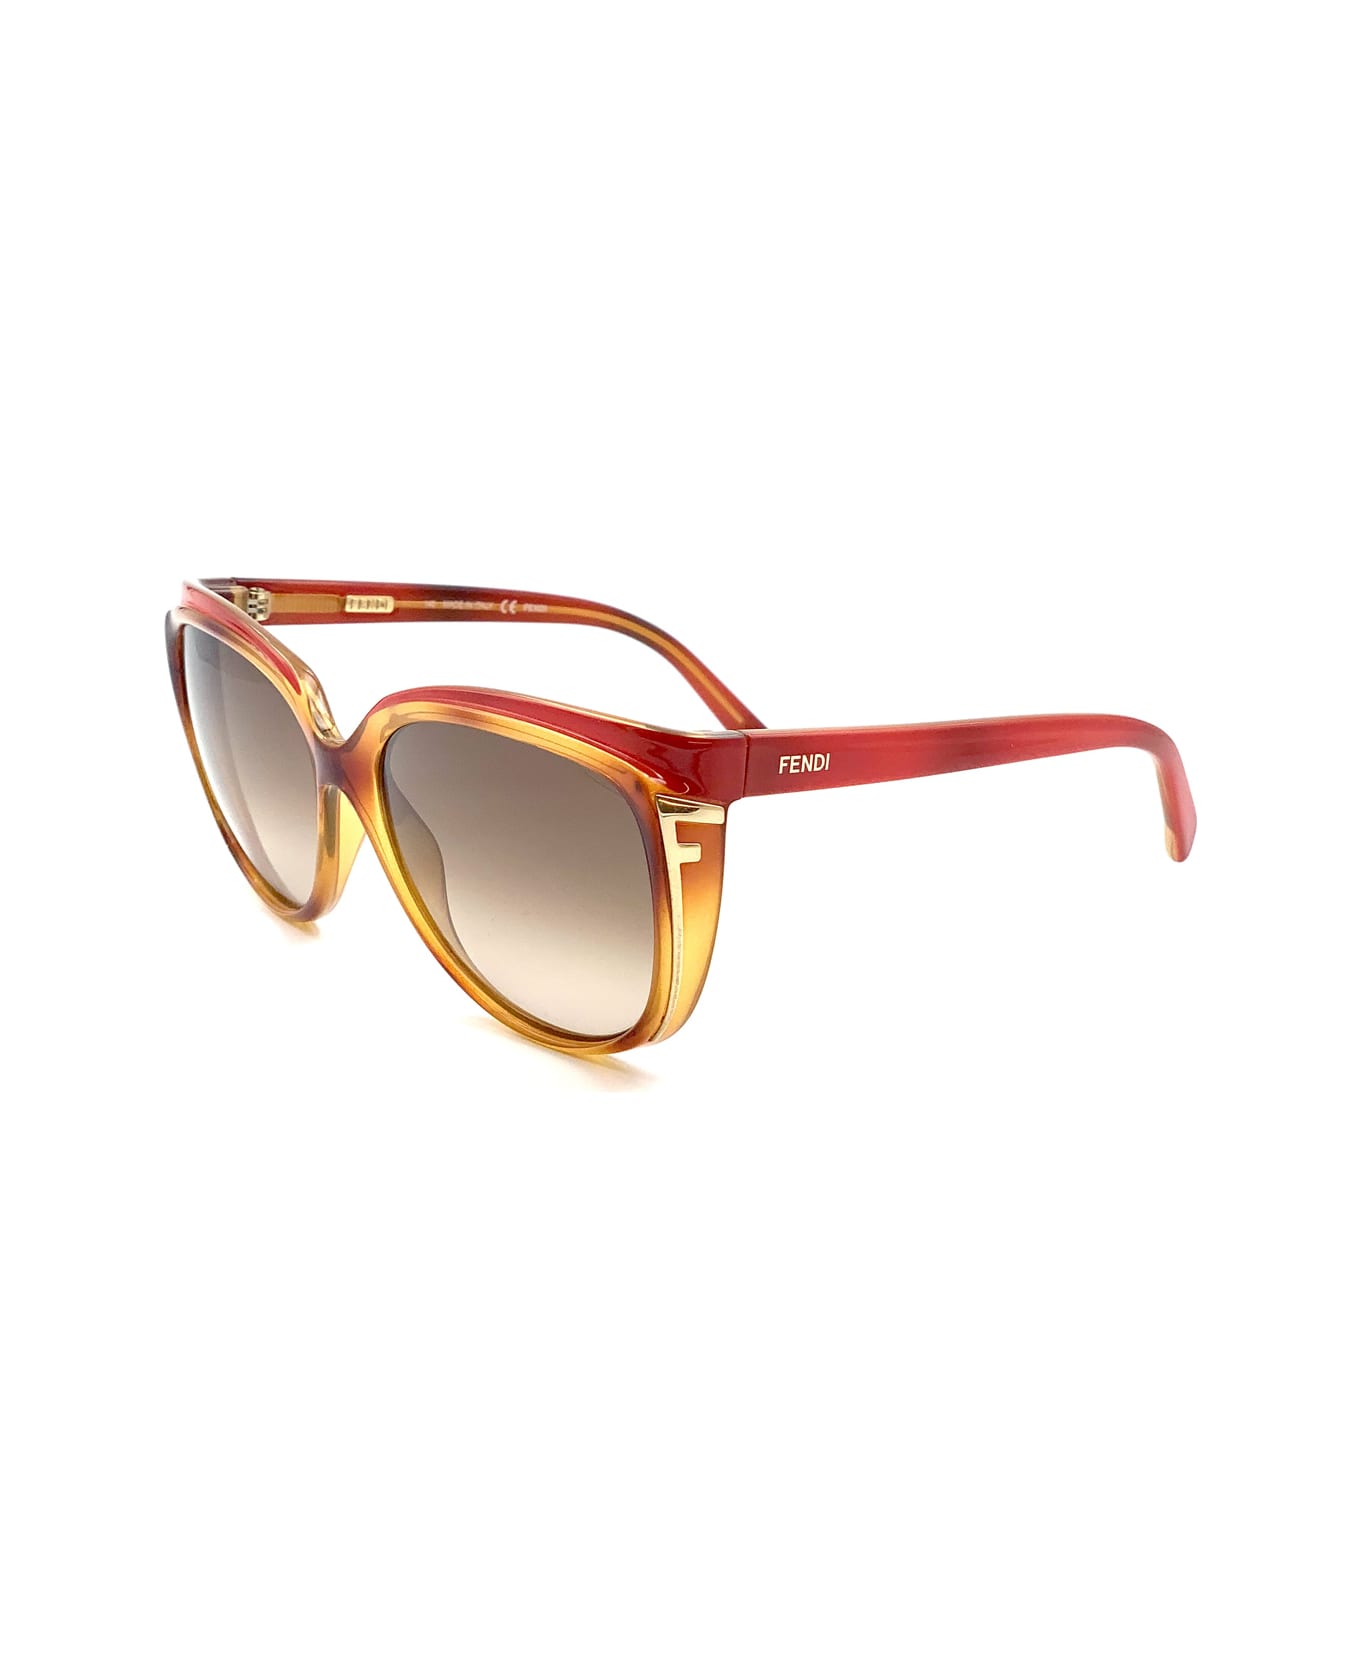 Fendi Eyewear Sun 5283 18825 725 Blonde Havana Sunglasses - Arancione サングラス